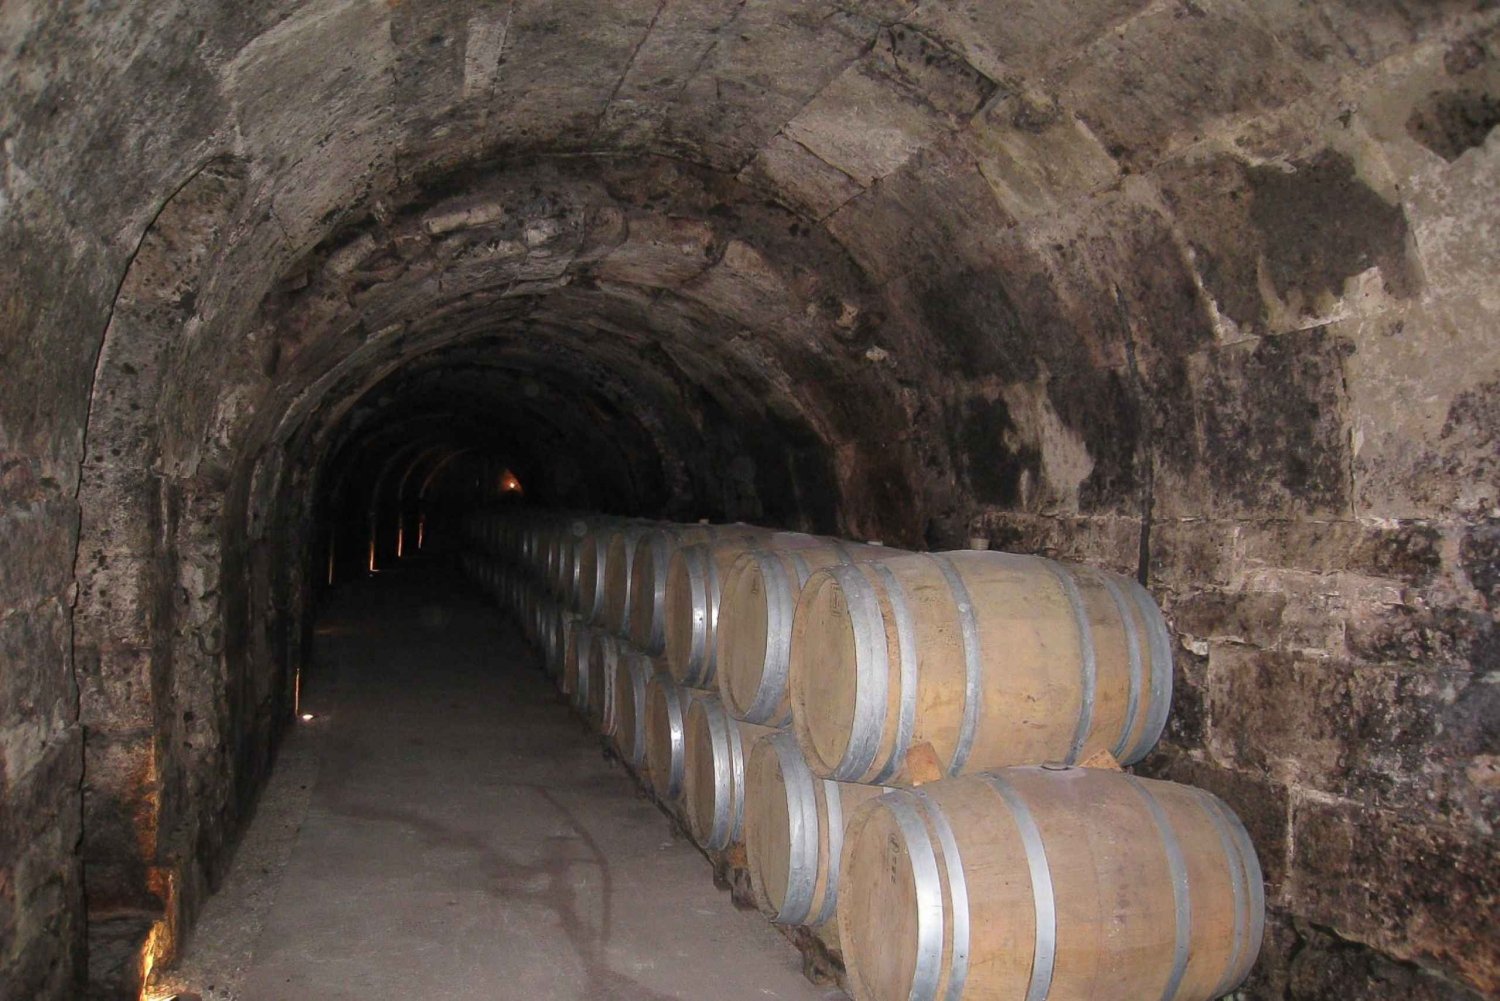 Ribera del Duero Tour of 3 Different Wineries